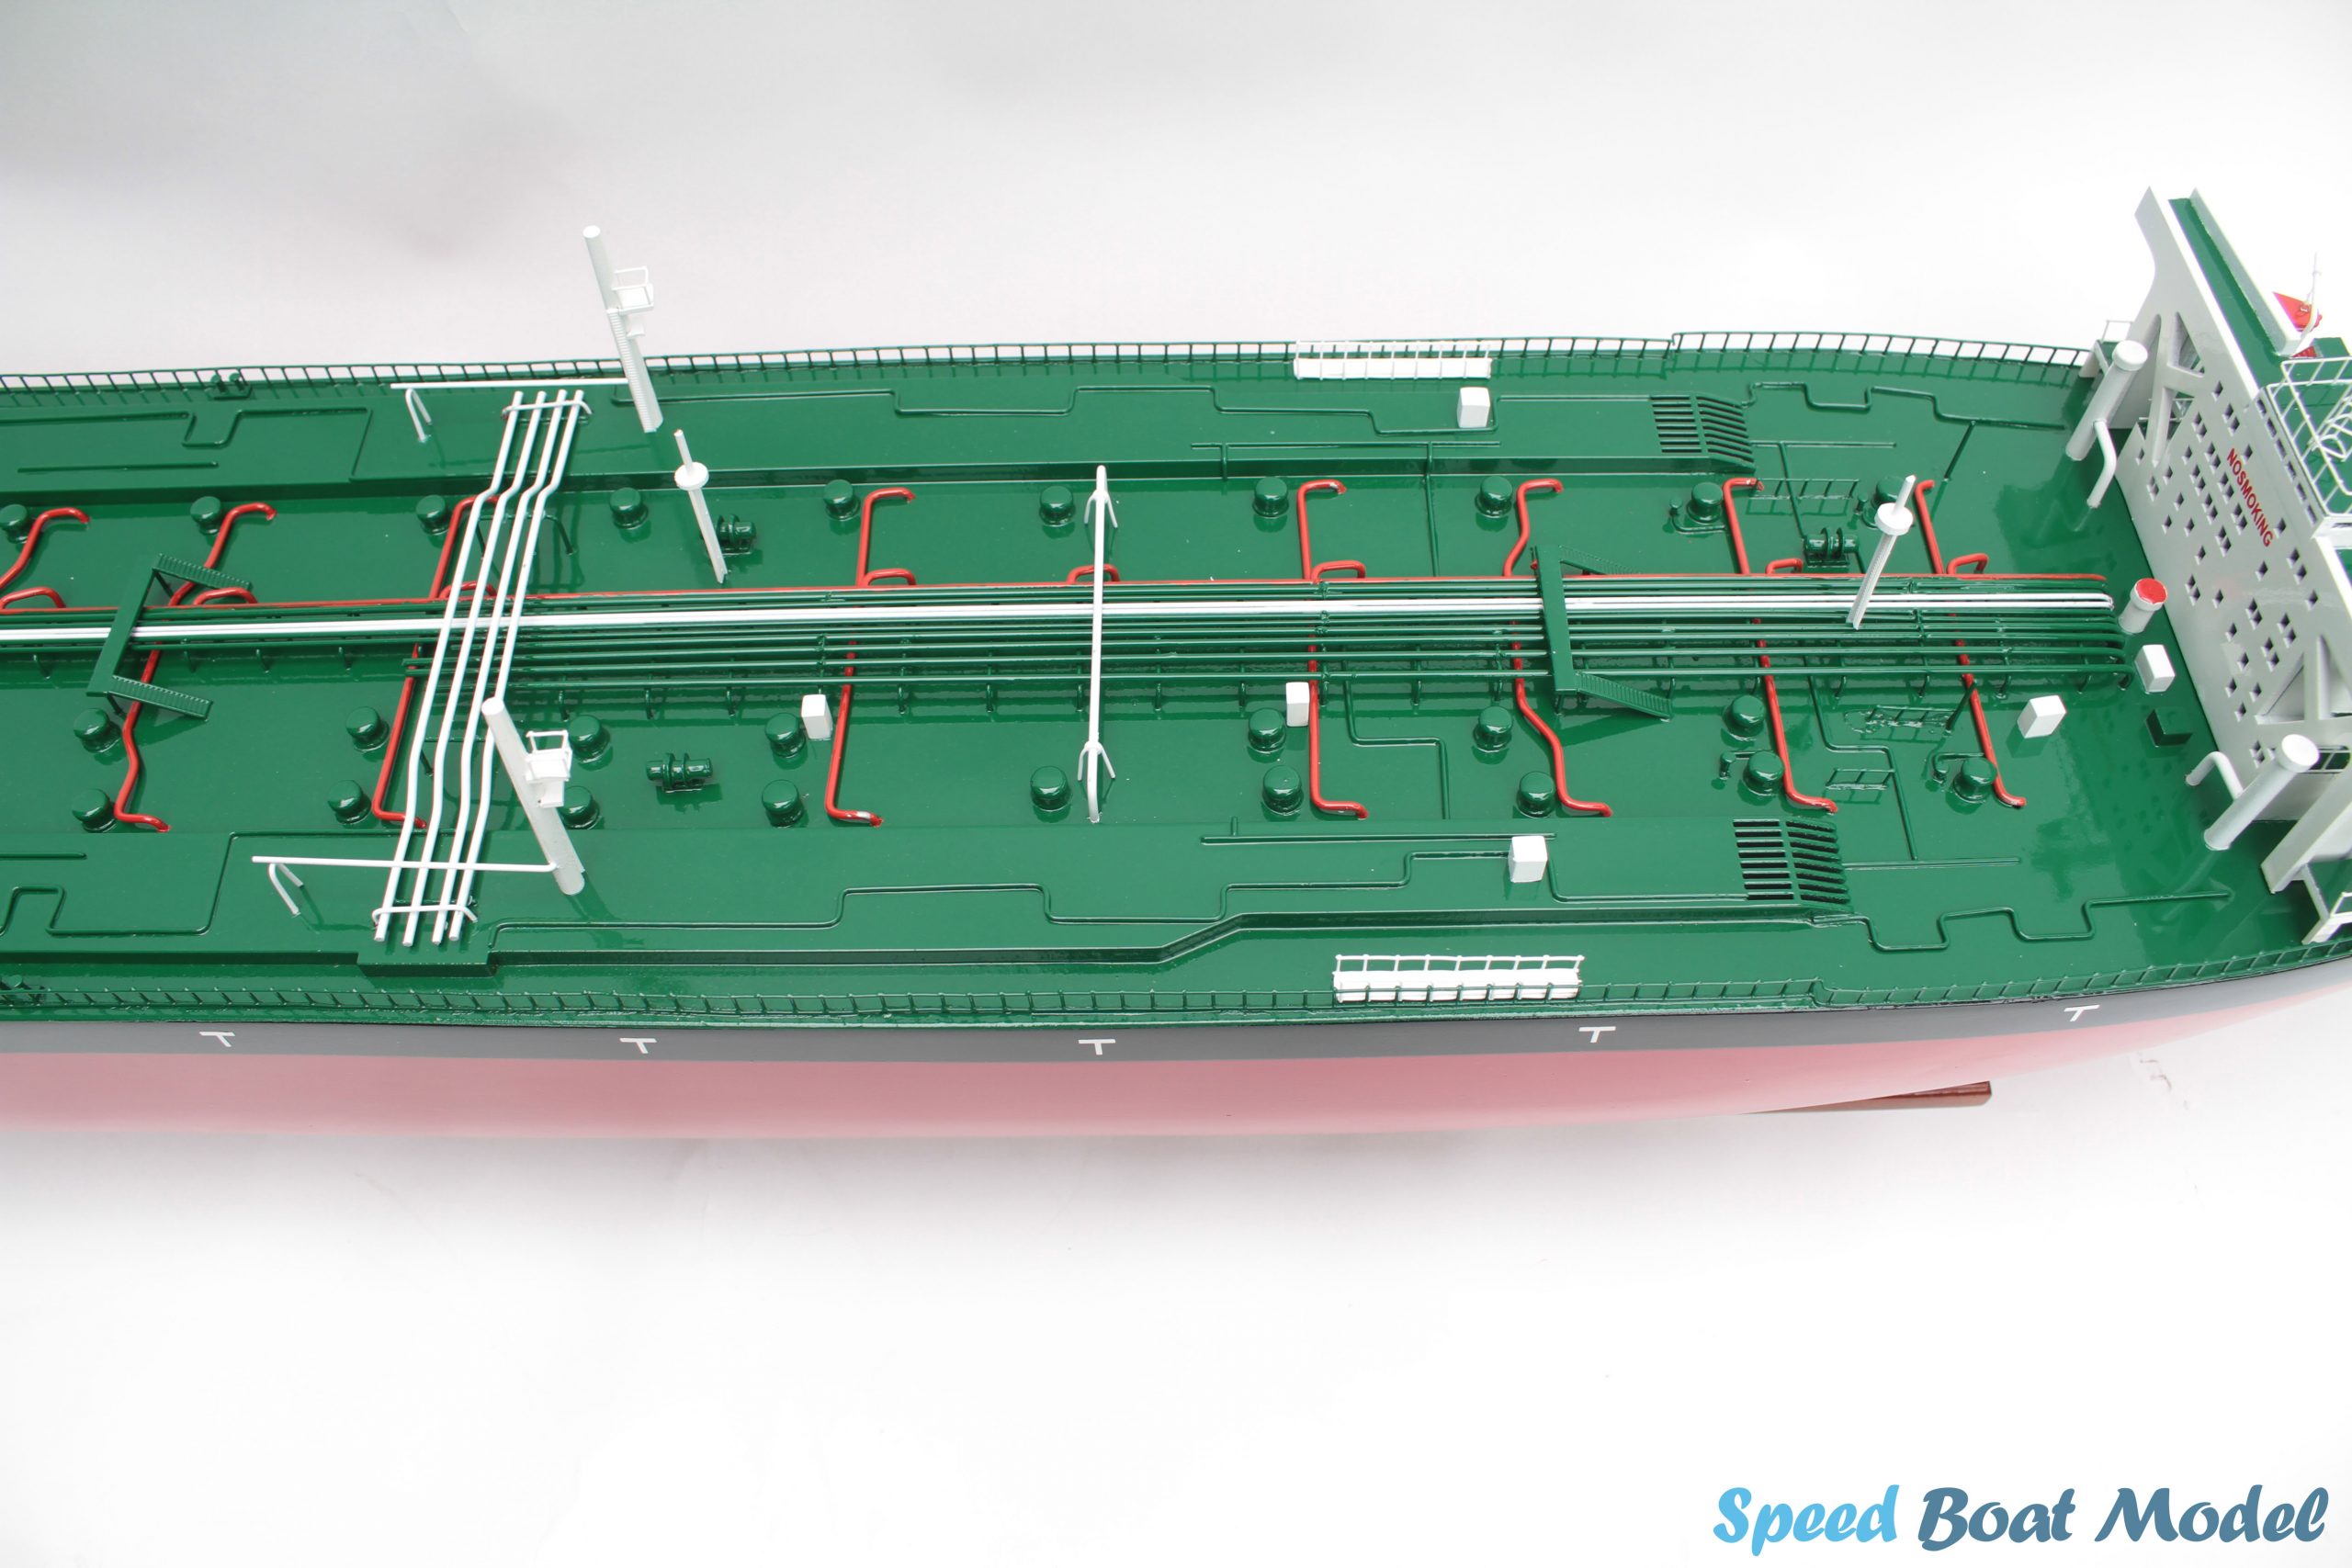 Seawise Giant Commercial Ship Model 45.2